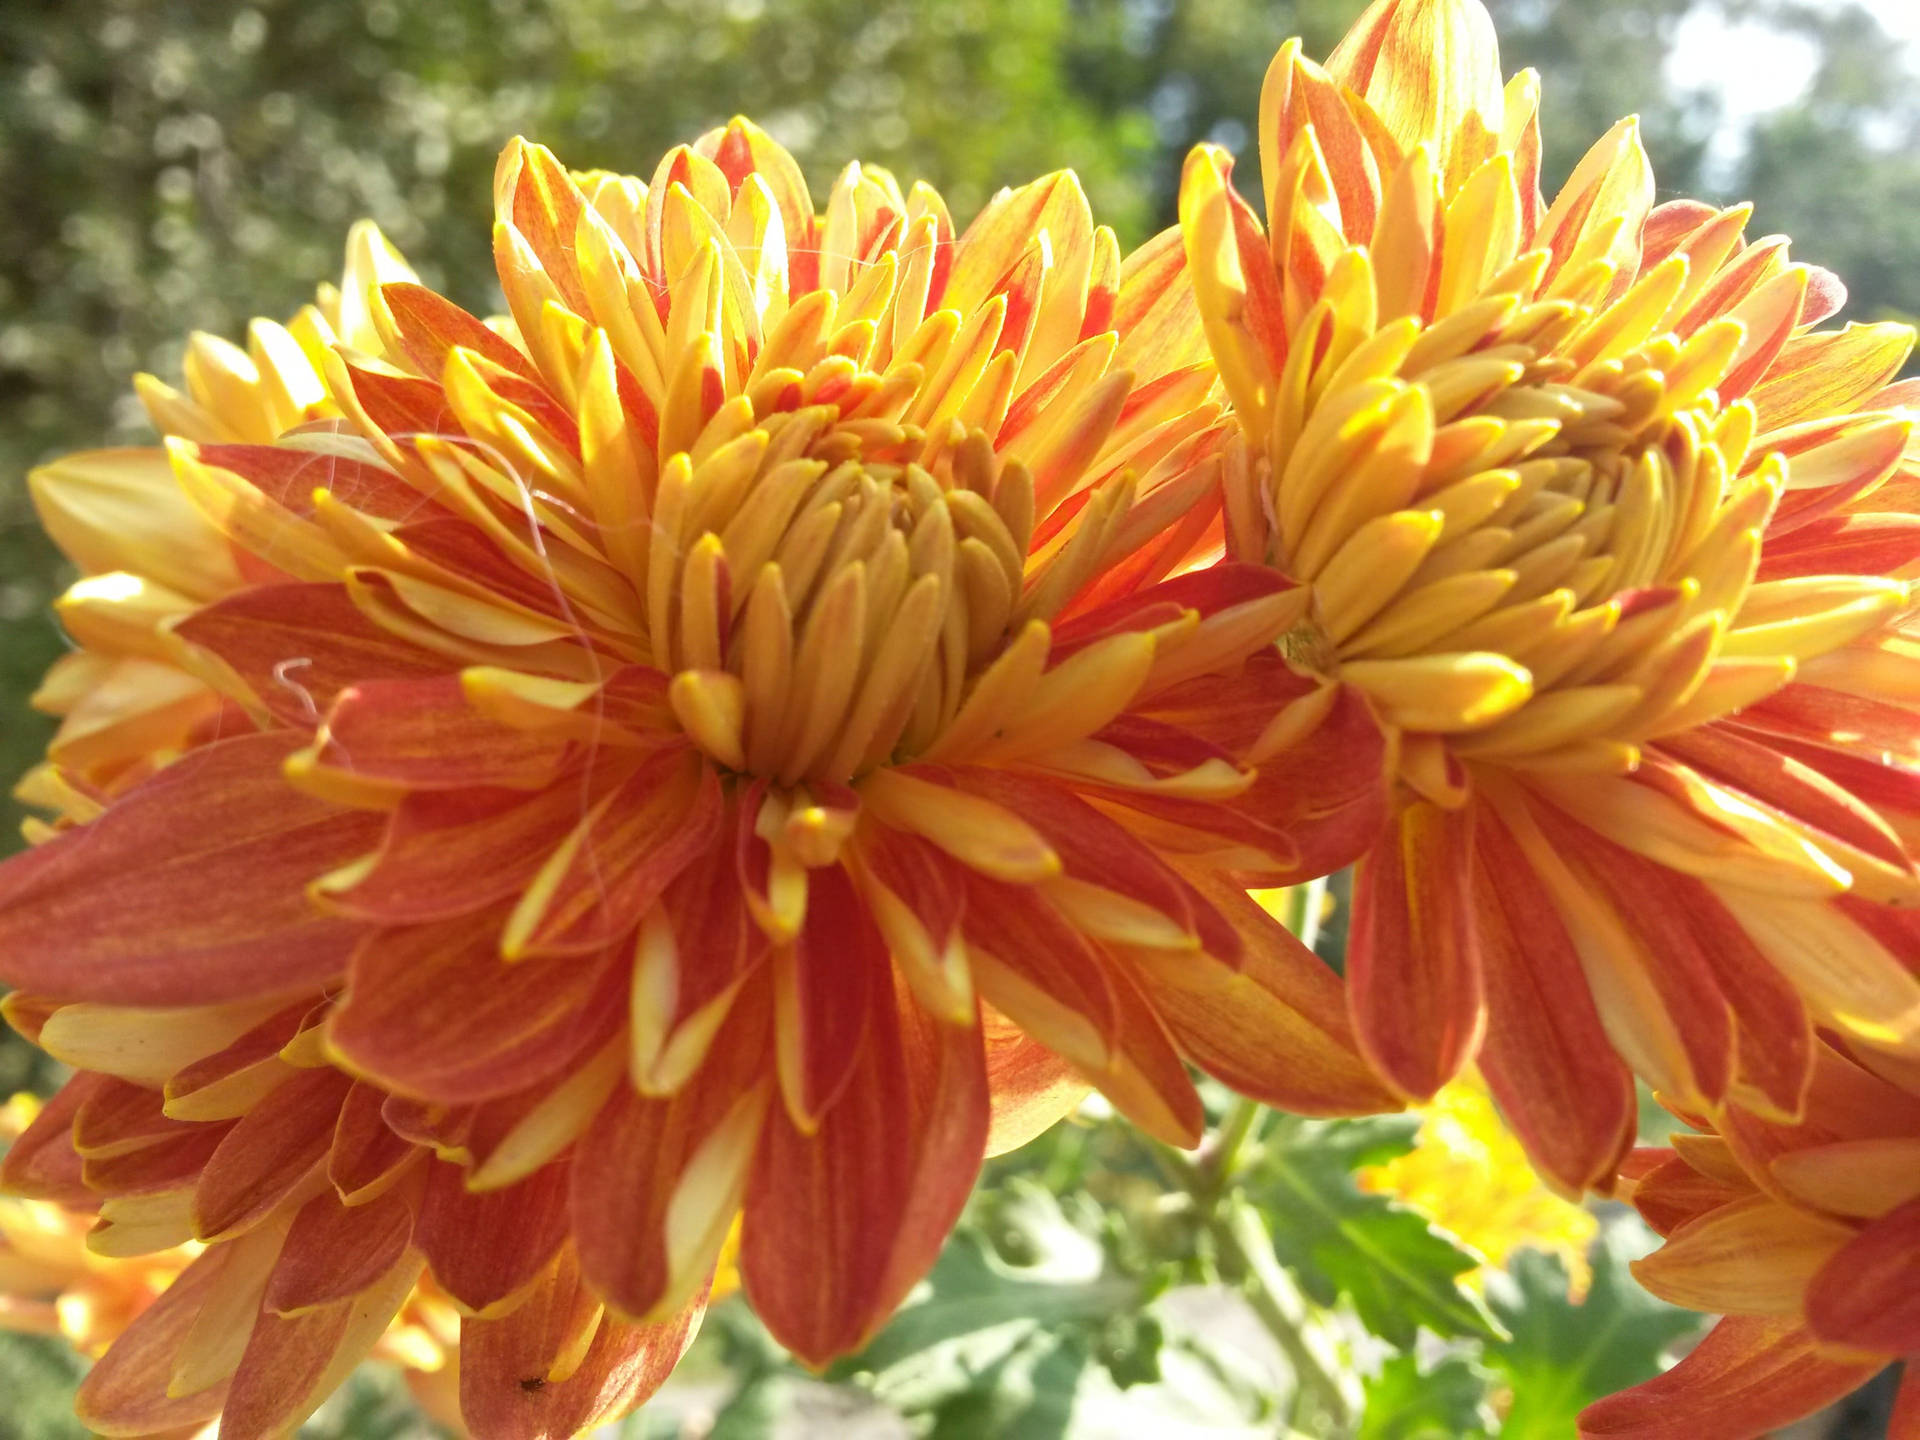 Caption: Vibrant Orange Chrysanthemums In Bloom Background